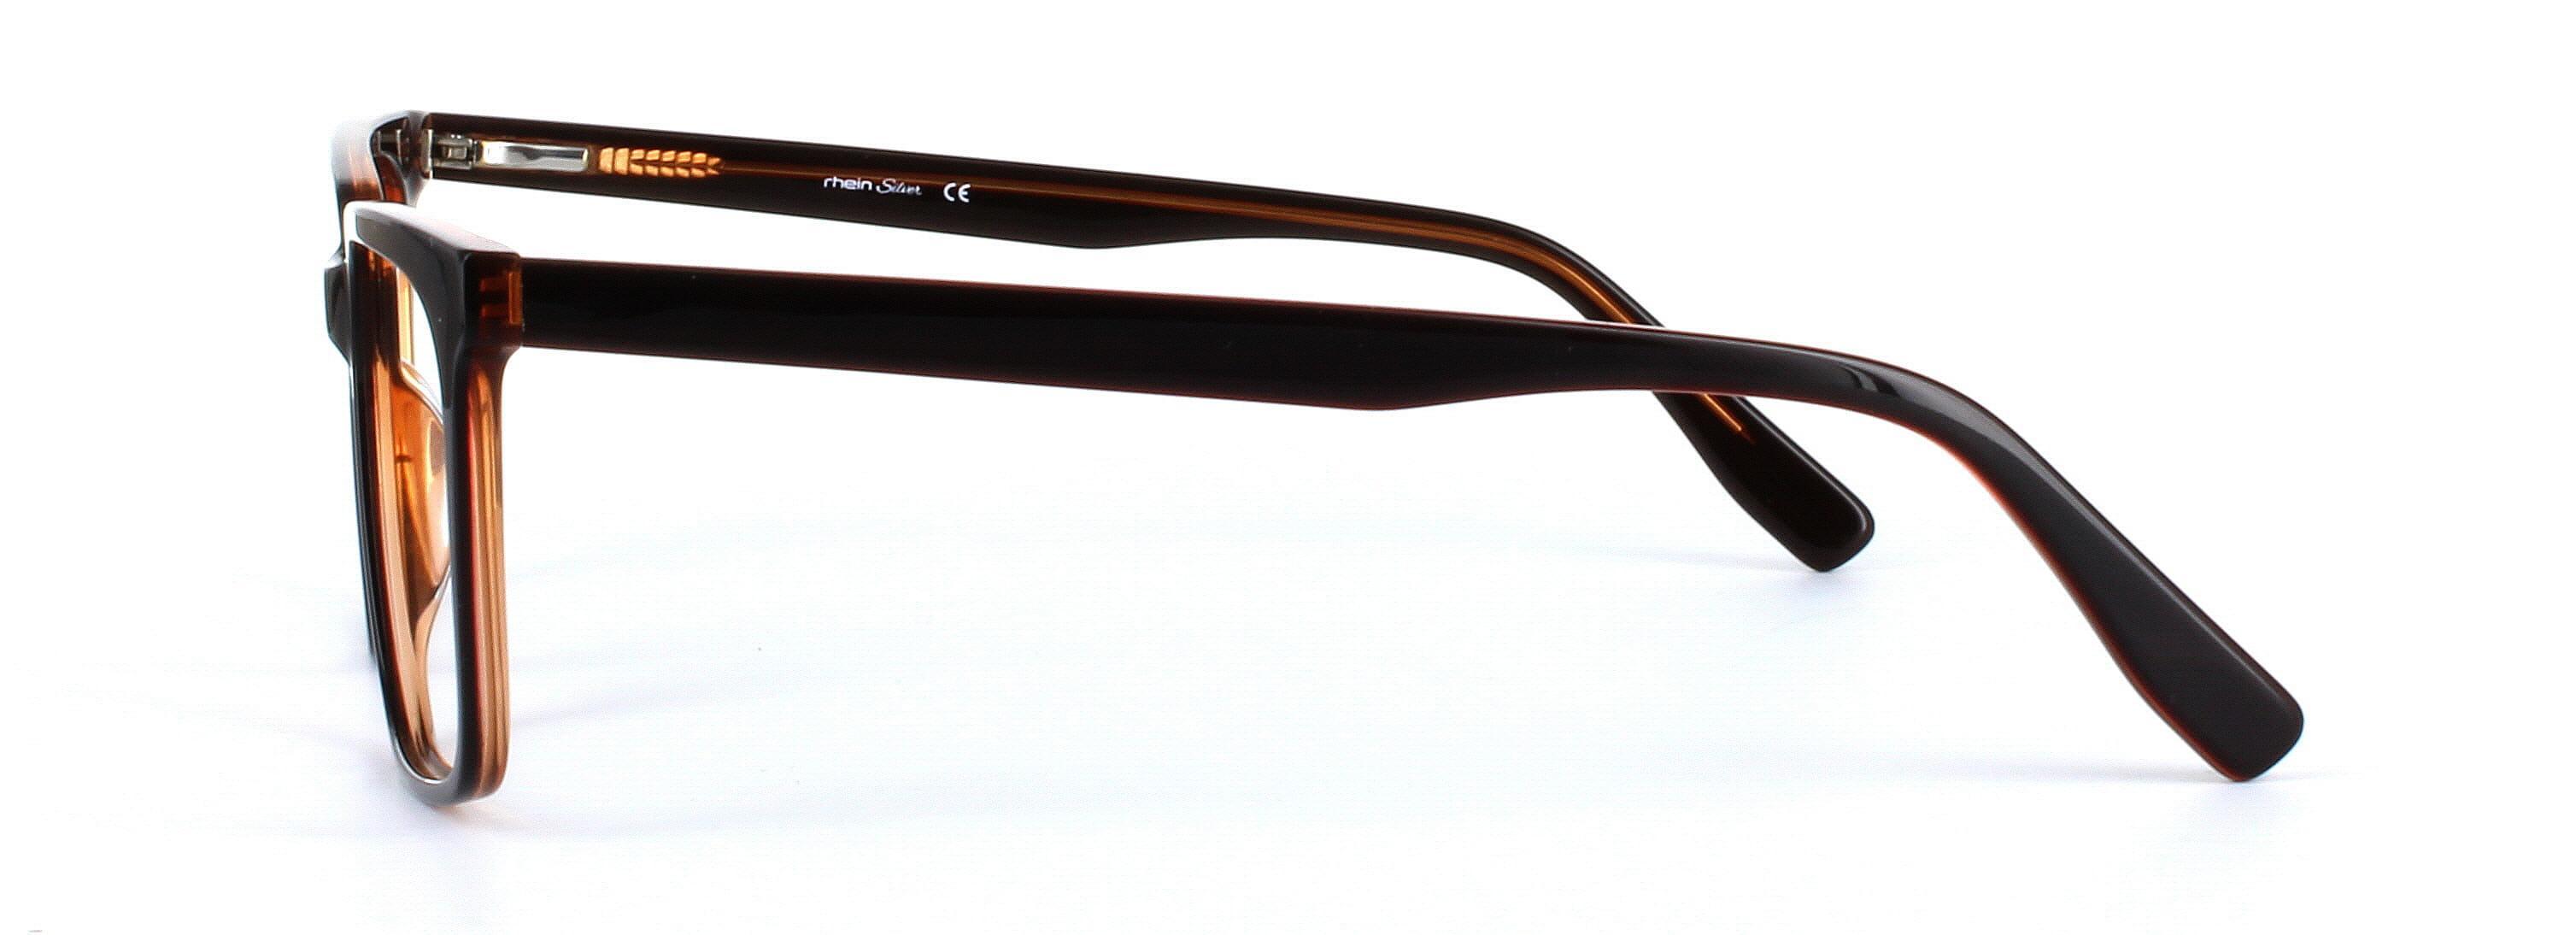 Coombe Brown Full Rim Square Rectangular Acetate Glasses - Image View 2